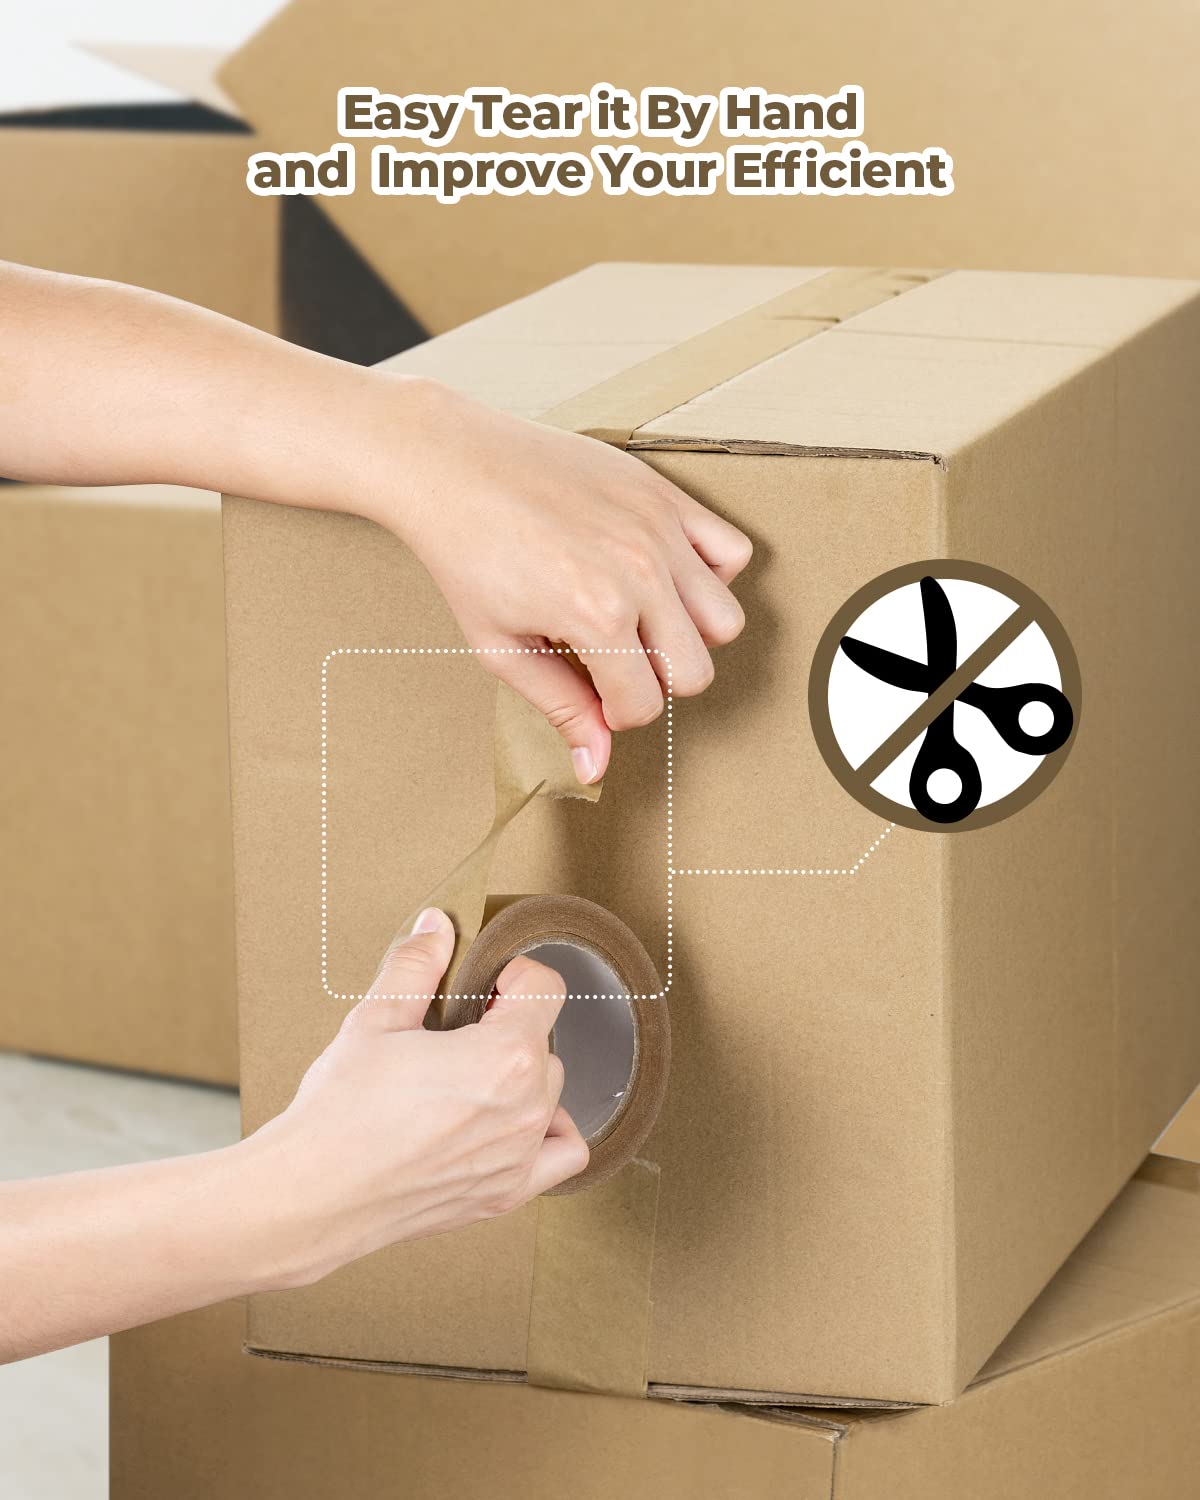 MUNBYN kraft paper heavy duty tape is easy to tear and improves packaging efficiency.